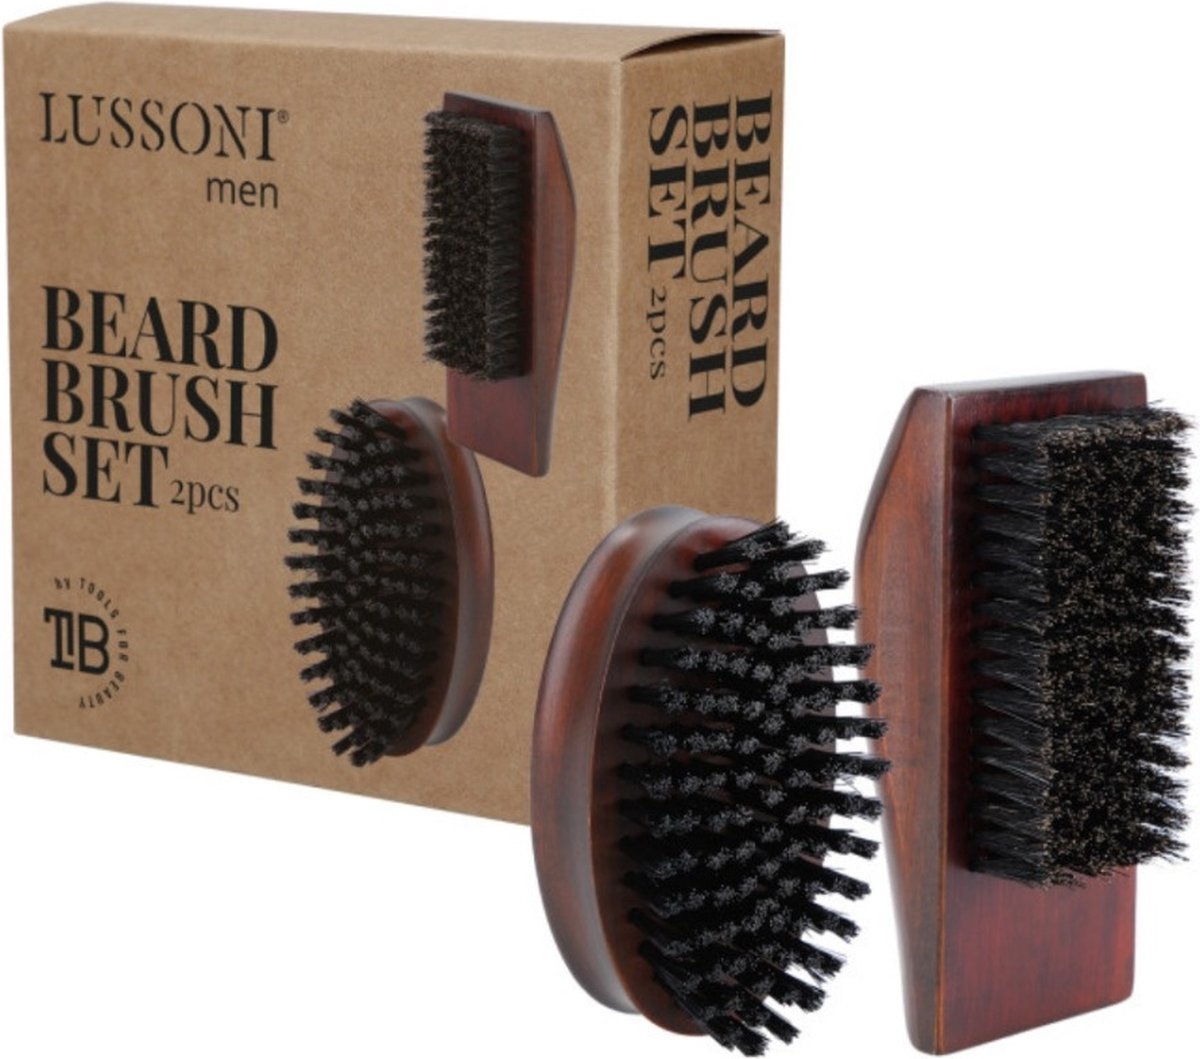 Lussoni - Beard Brush Set - Vegan + Natural Brush